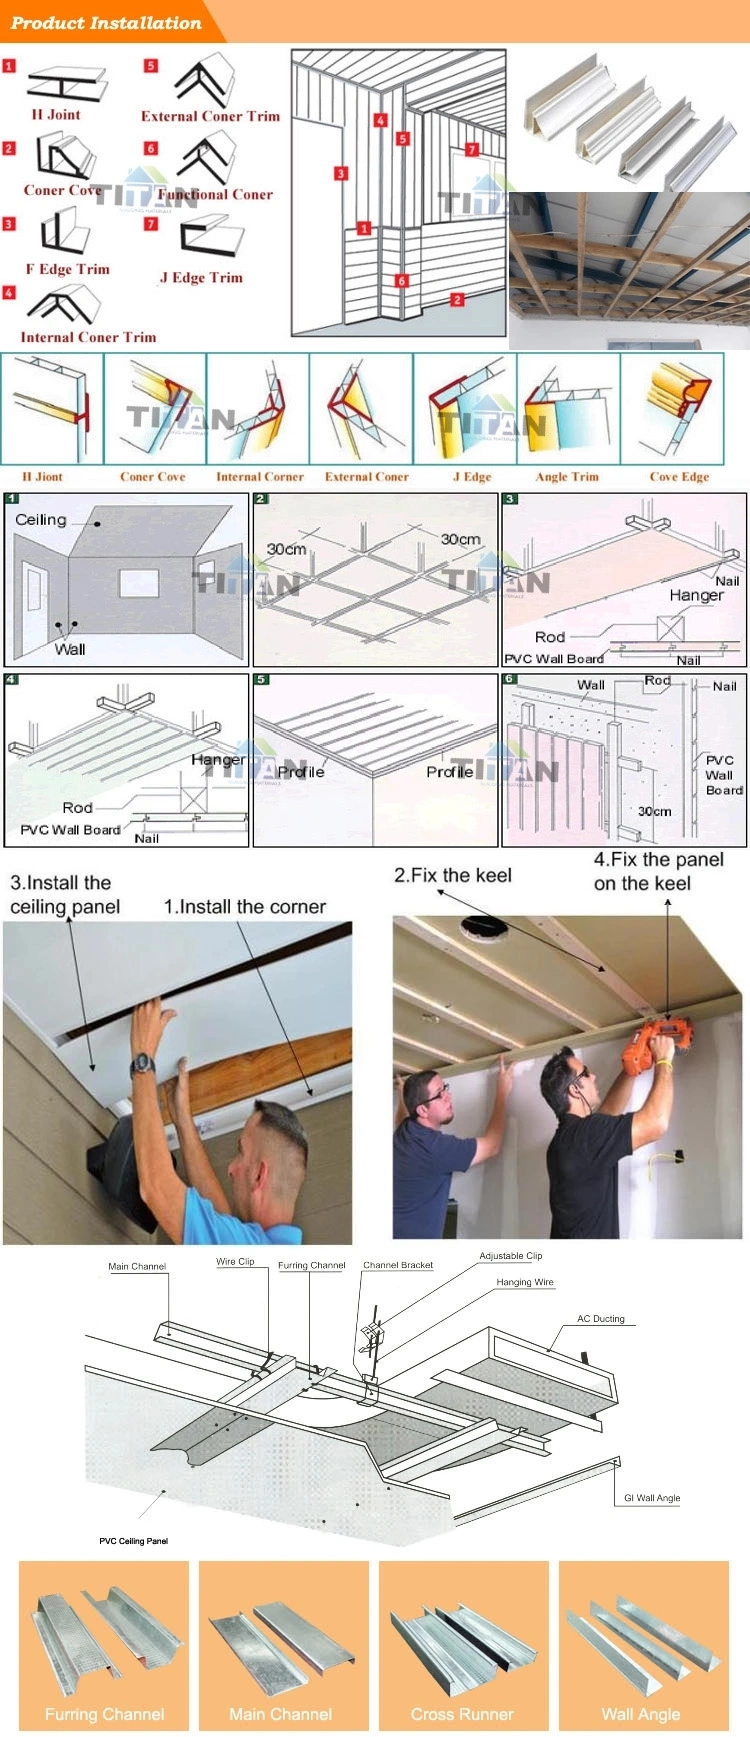 Indoor Decoration PVC Panel/PVC Interior Decorative Wall Panels/PVC Ceiling